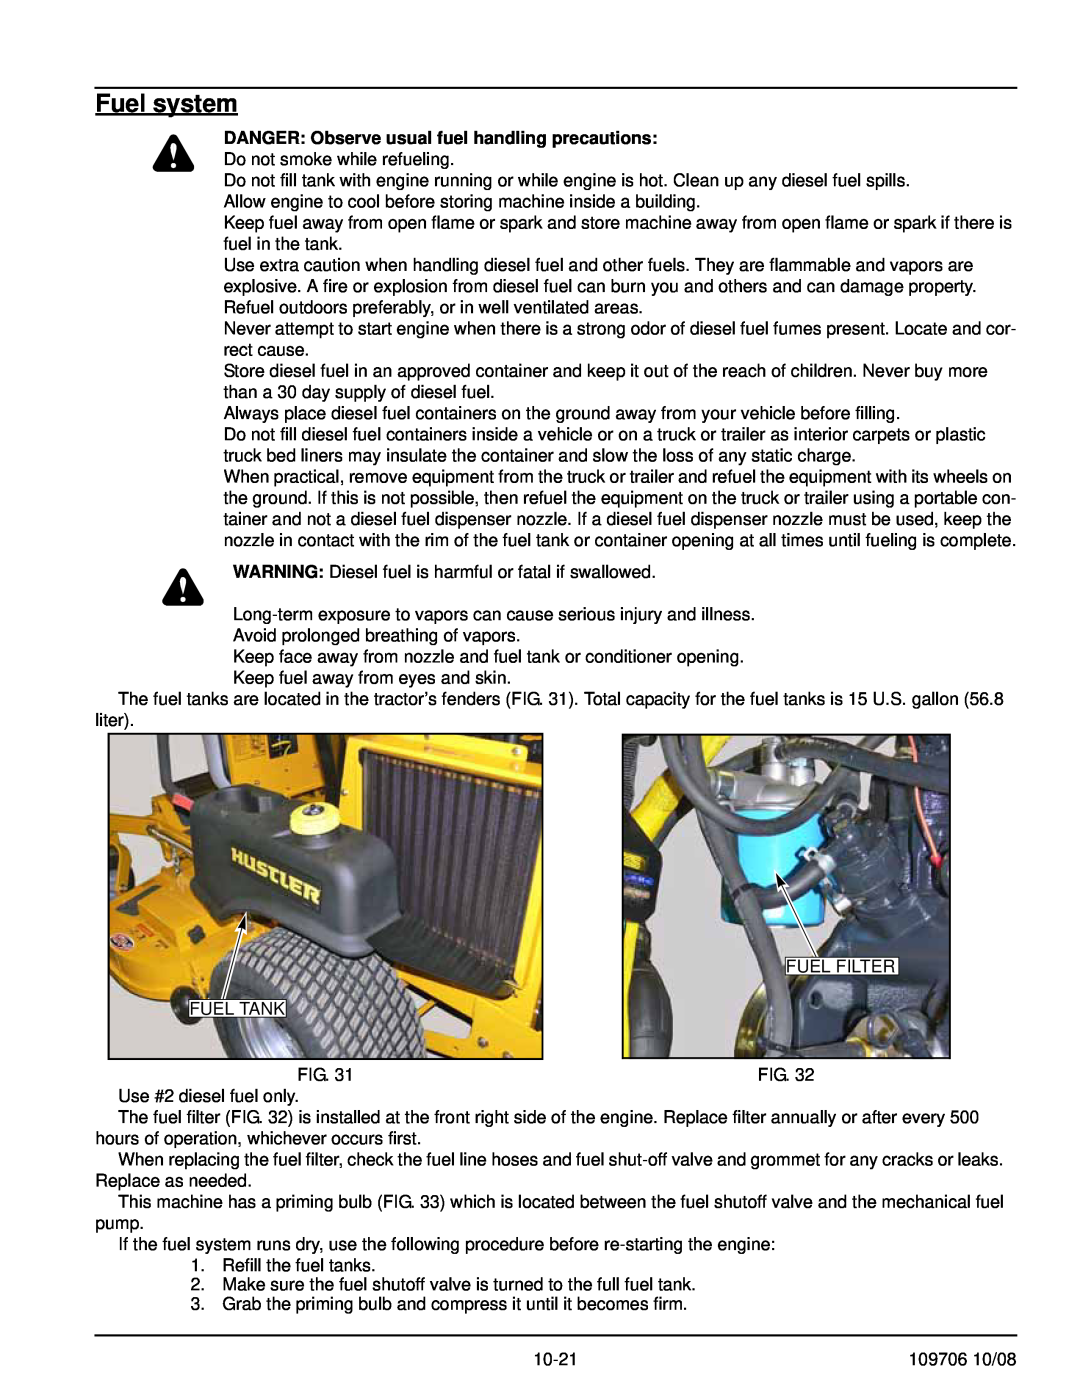 Hustler Turf Diesel Z manual Fuel system, DANGER Observe usual fuel handling precautions 